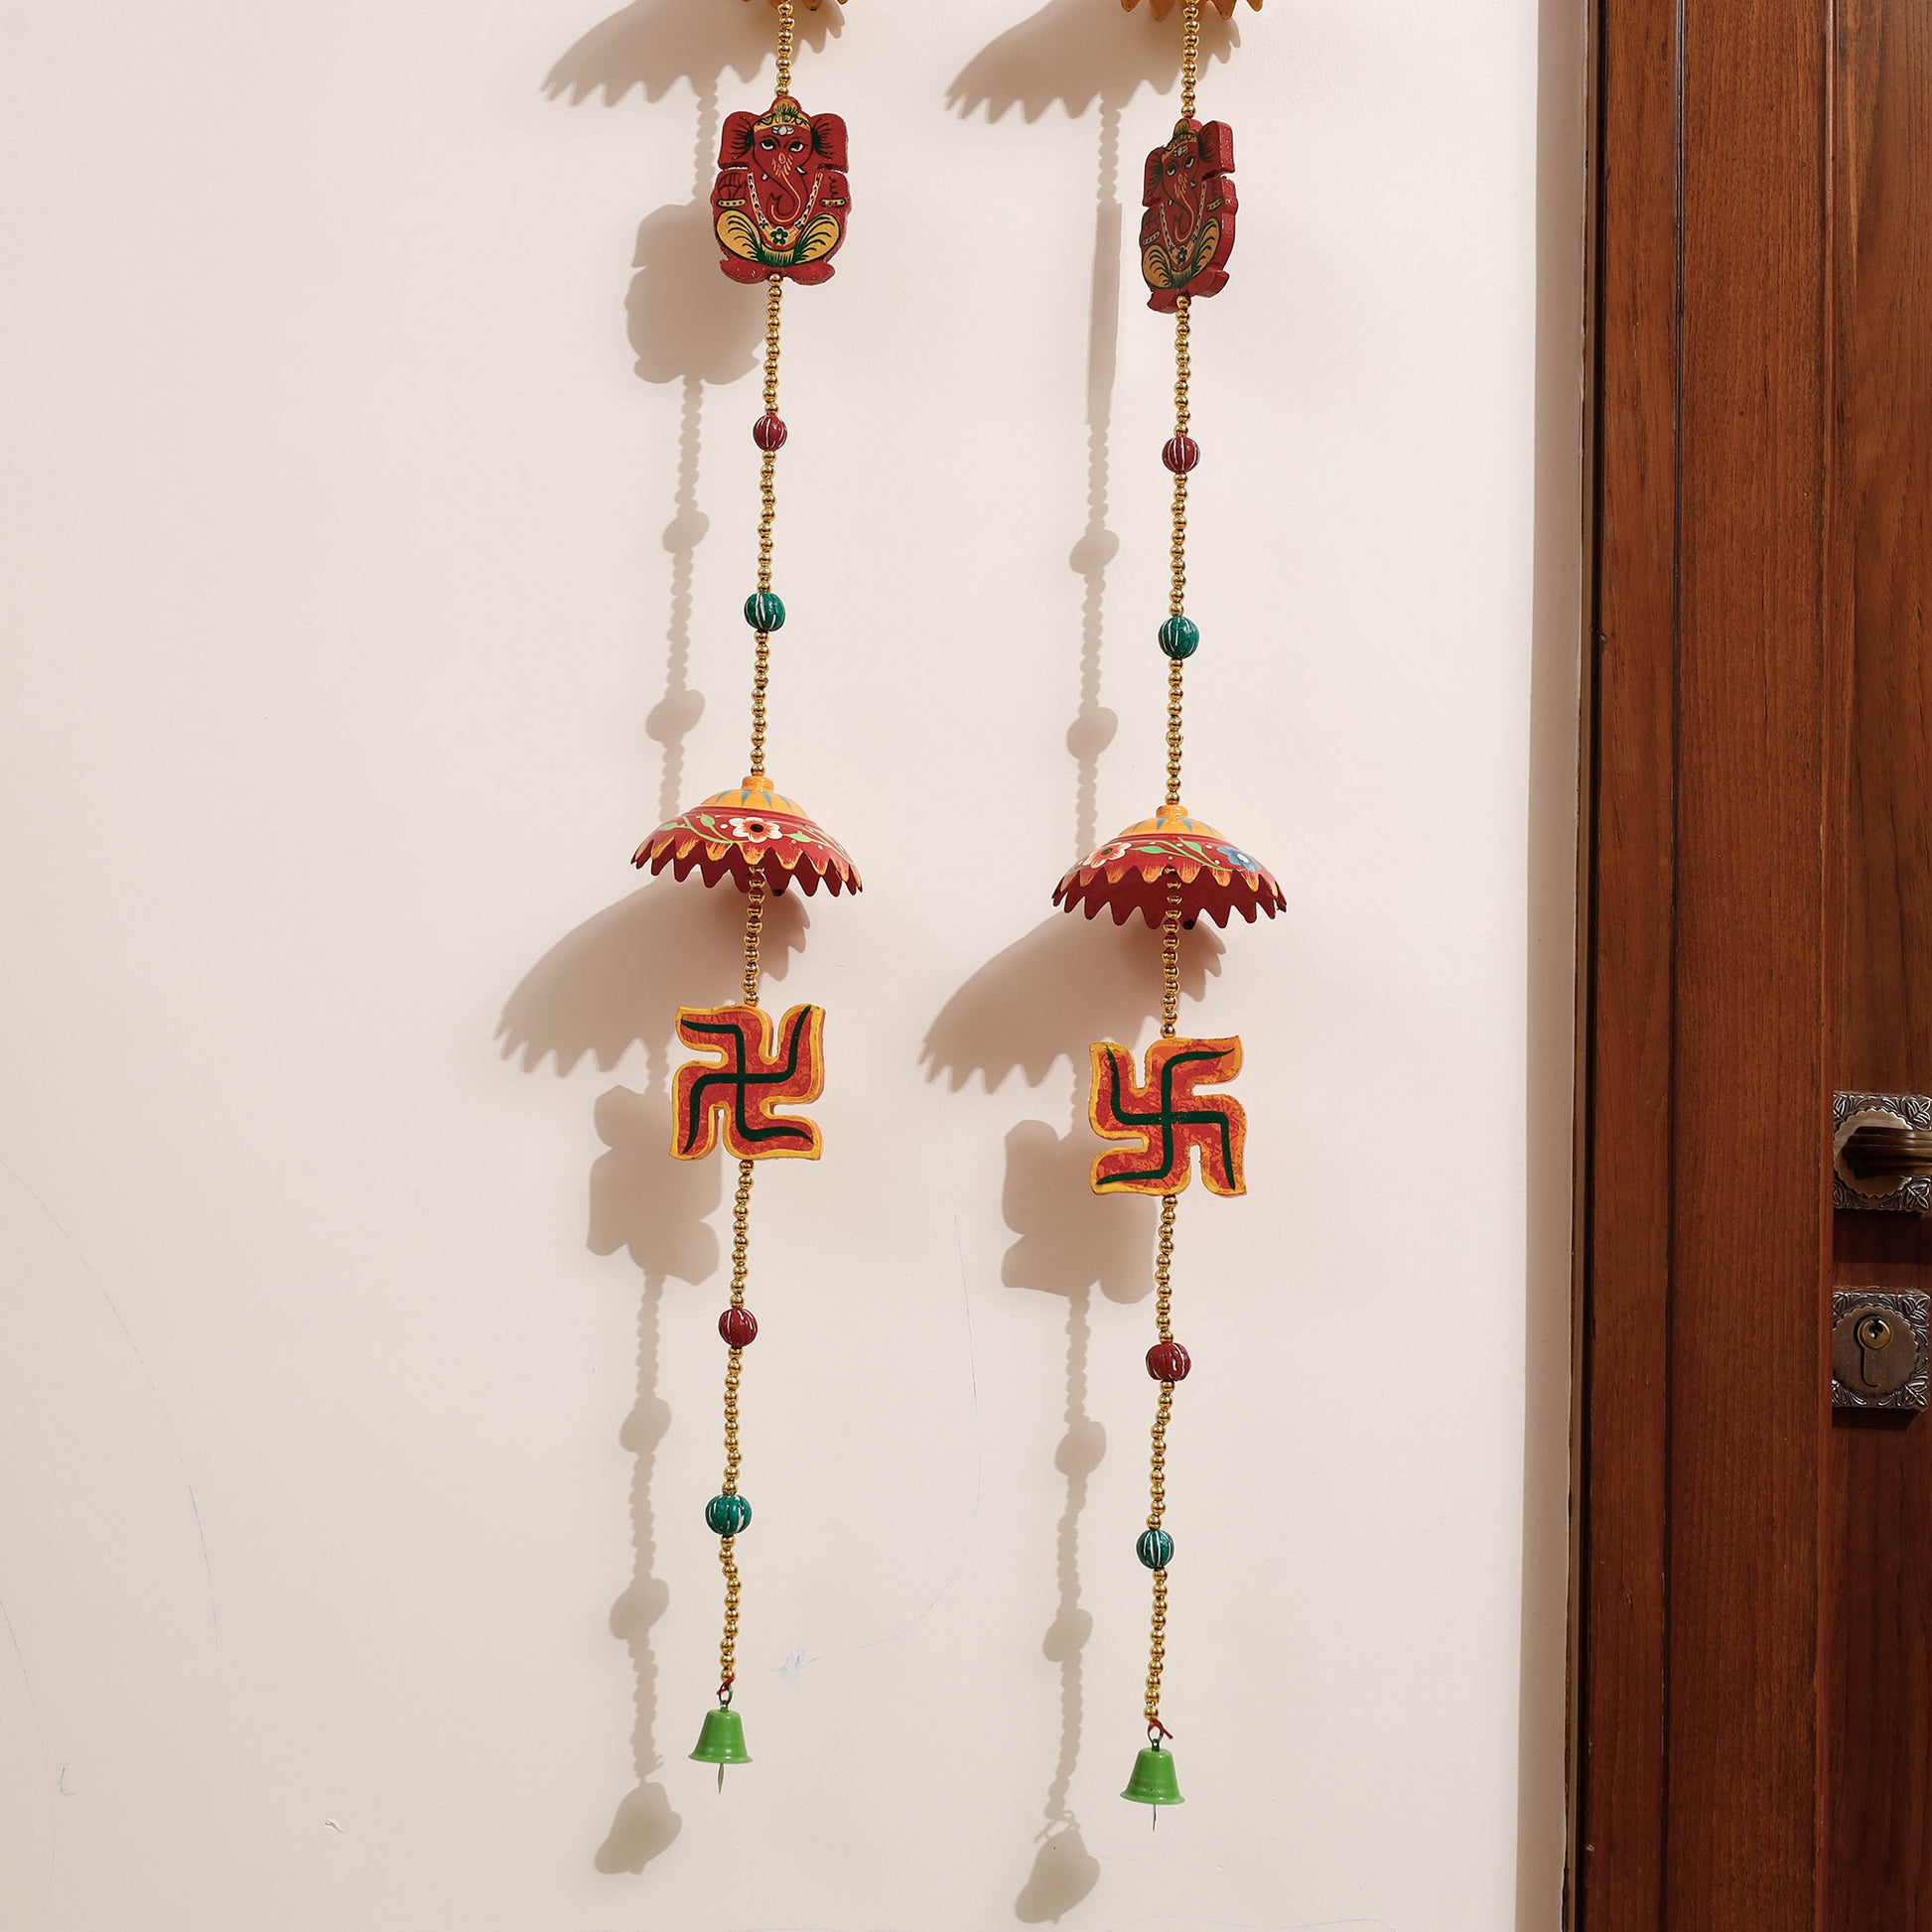 Decorative Hangings